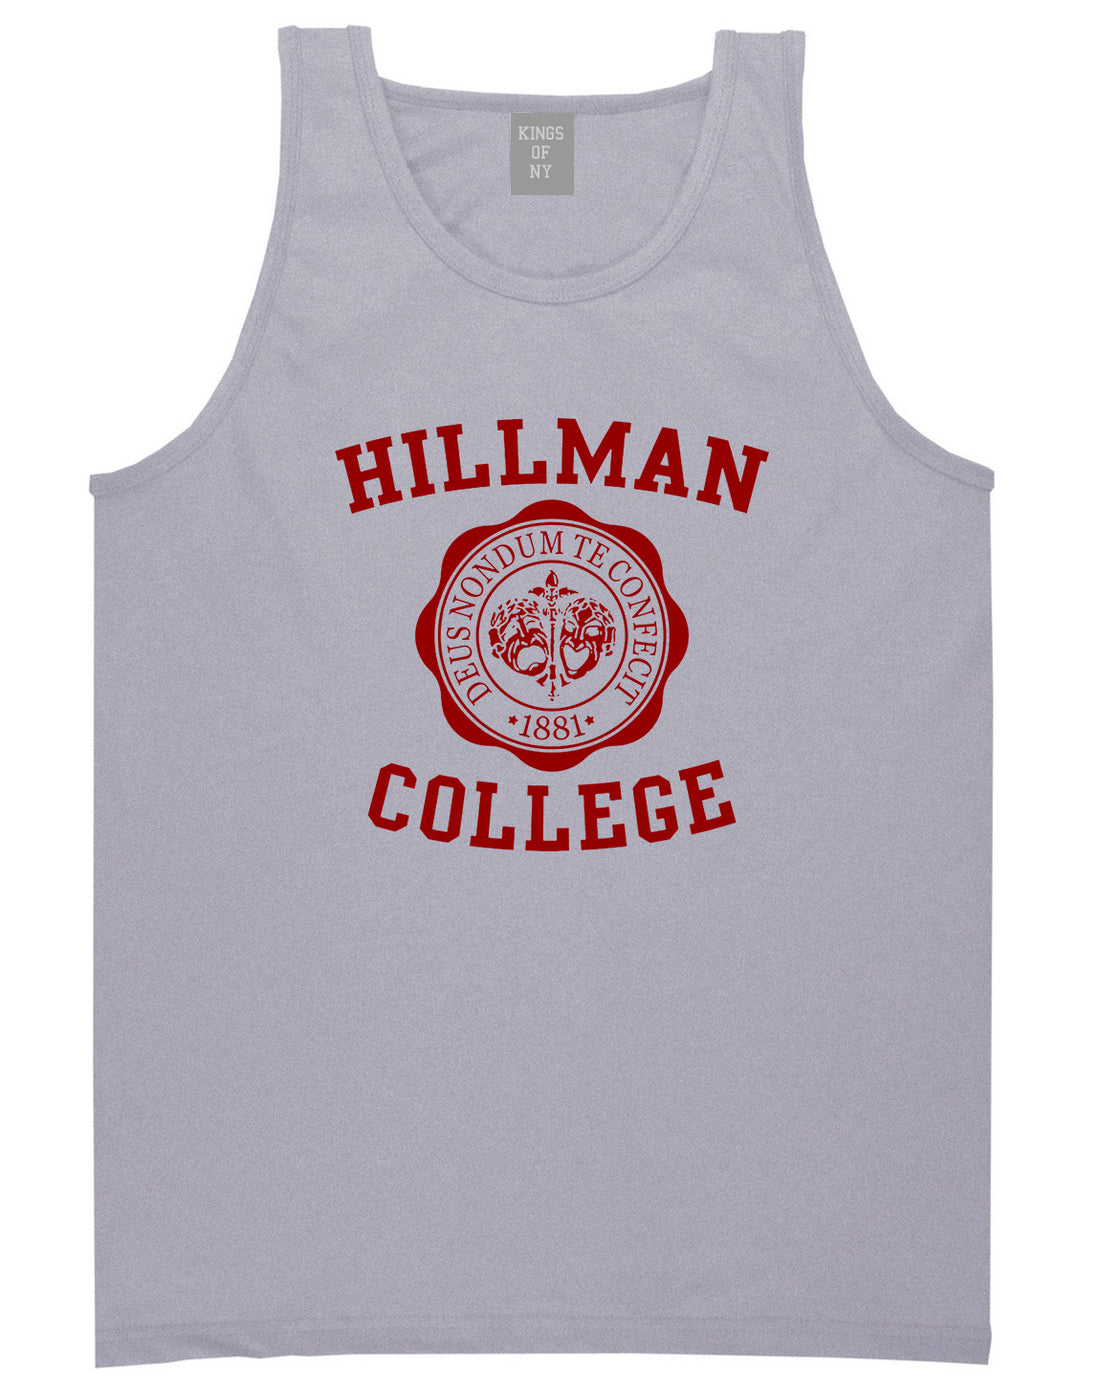 Hillman College Mens Tank Top Shirt Grey